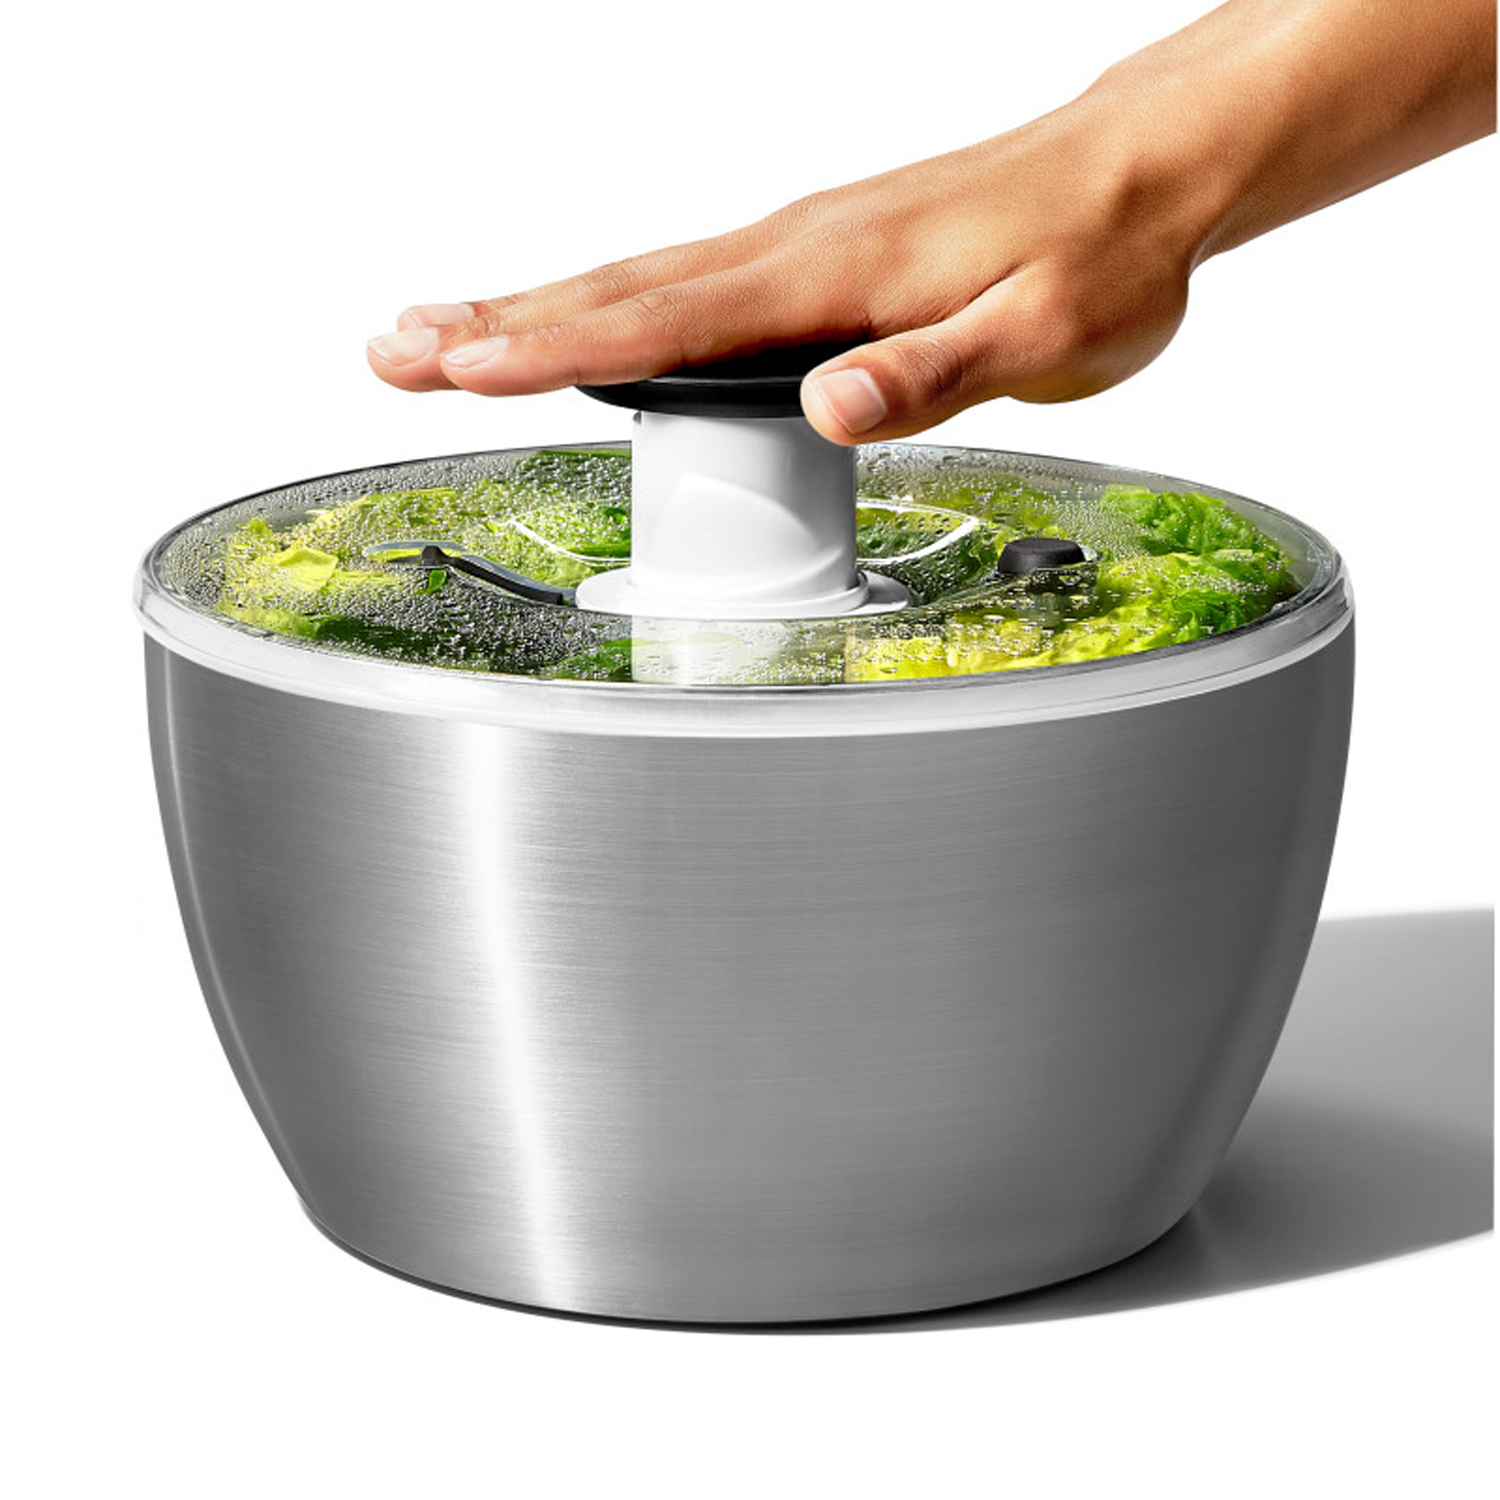 OXO Good Grips centrifugeuse à salade et aux herbes 2,8L